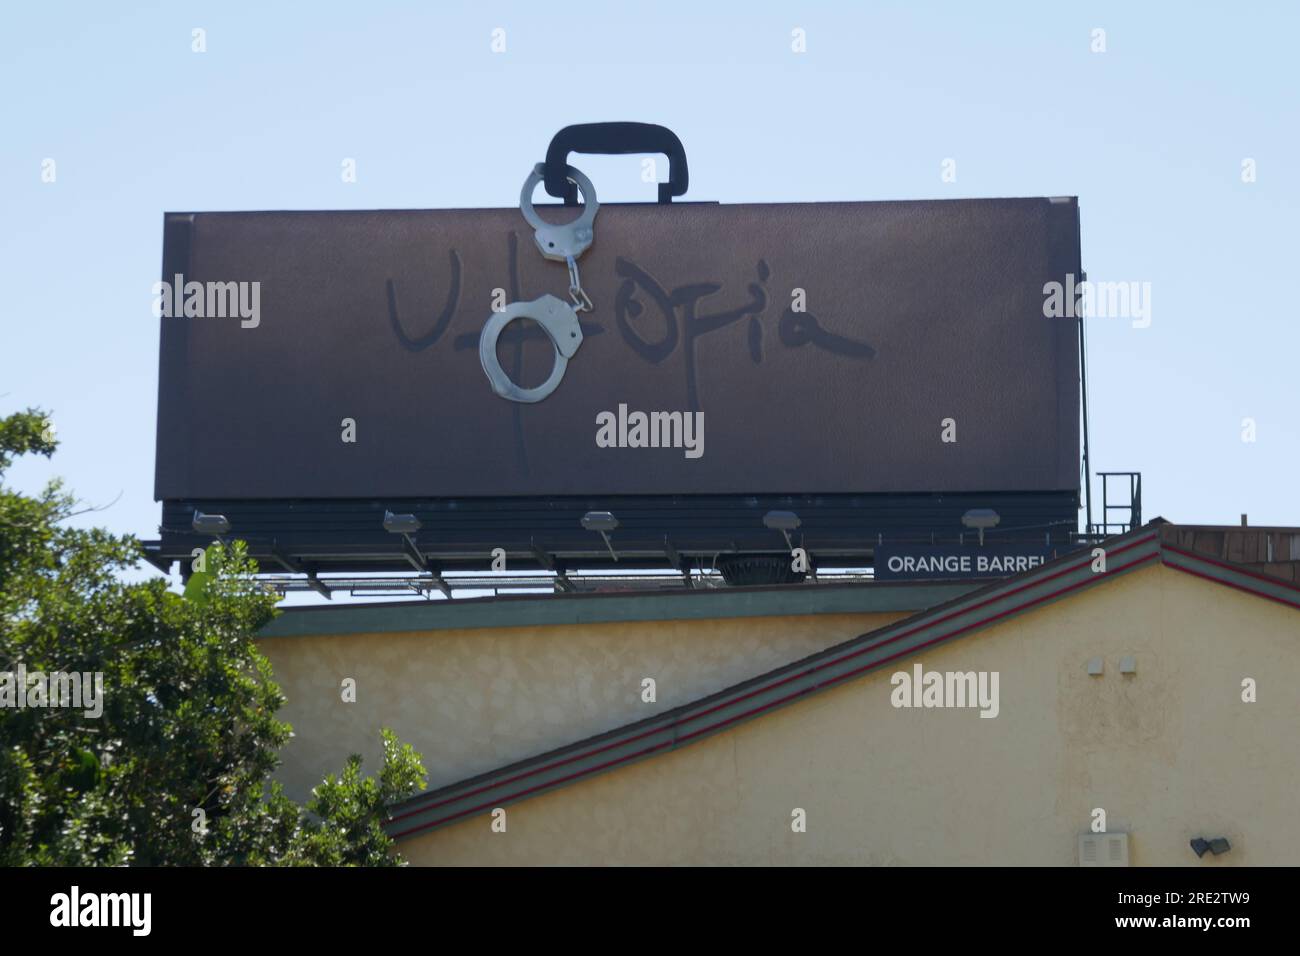 Travis Scott Utopia Billboards Appear in California